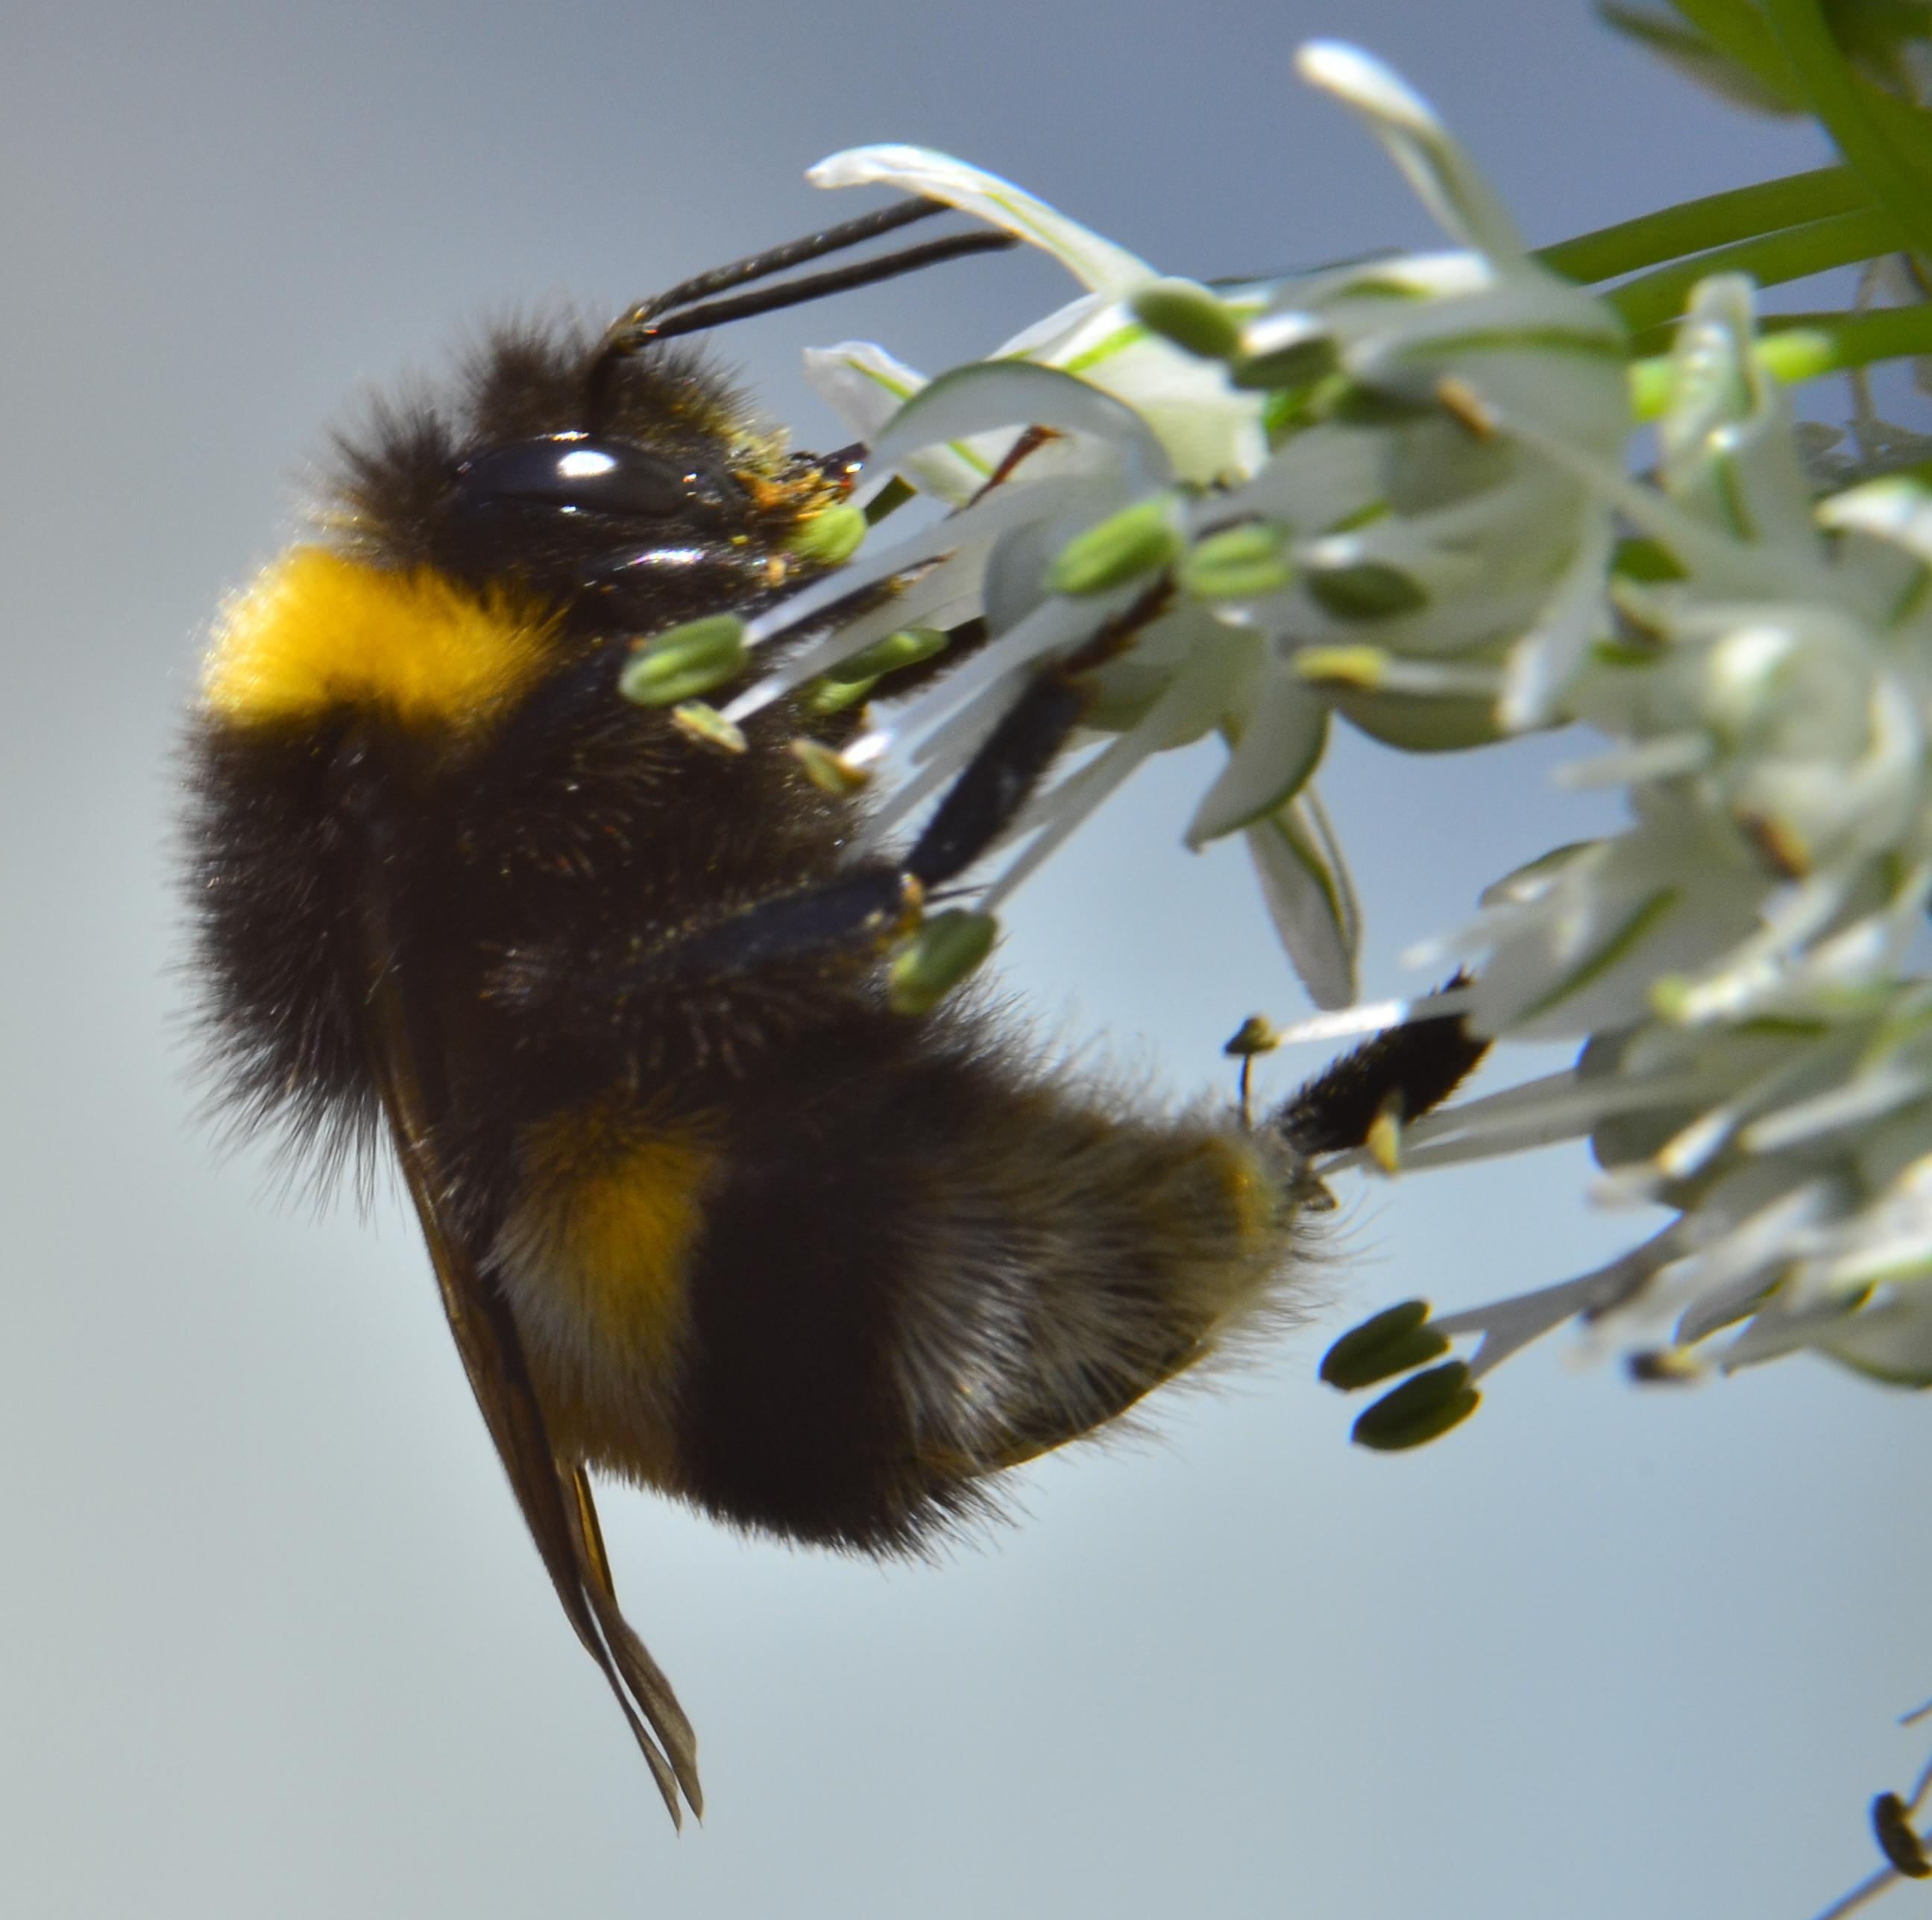 Bumblebee on allium